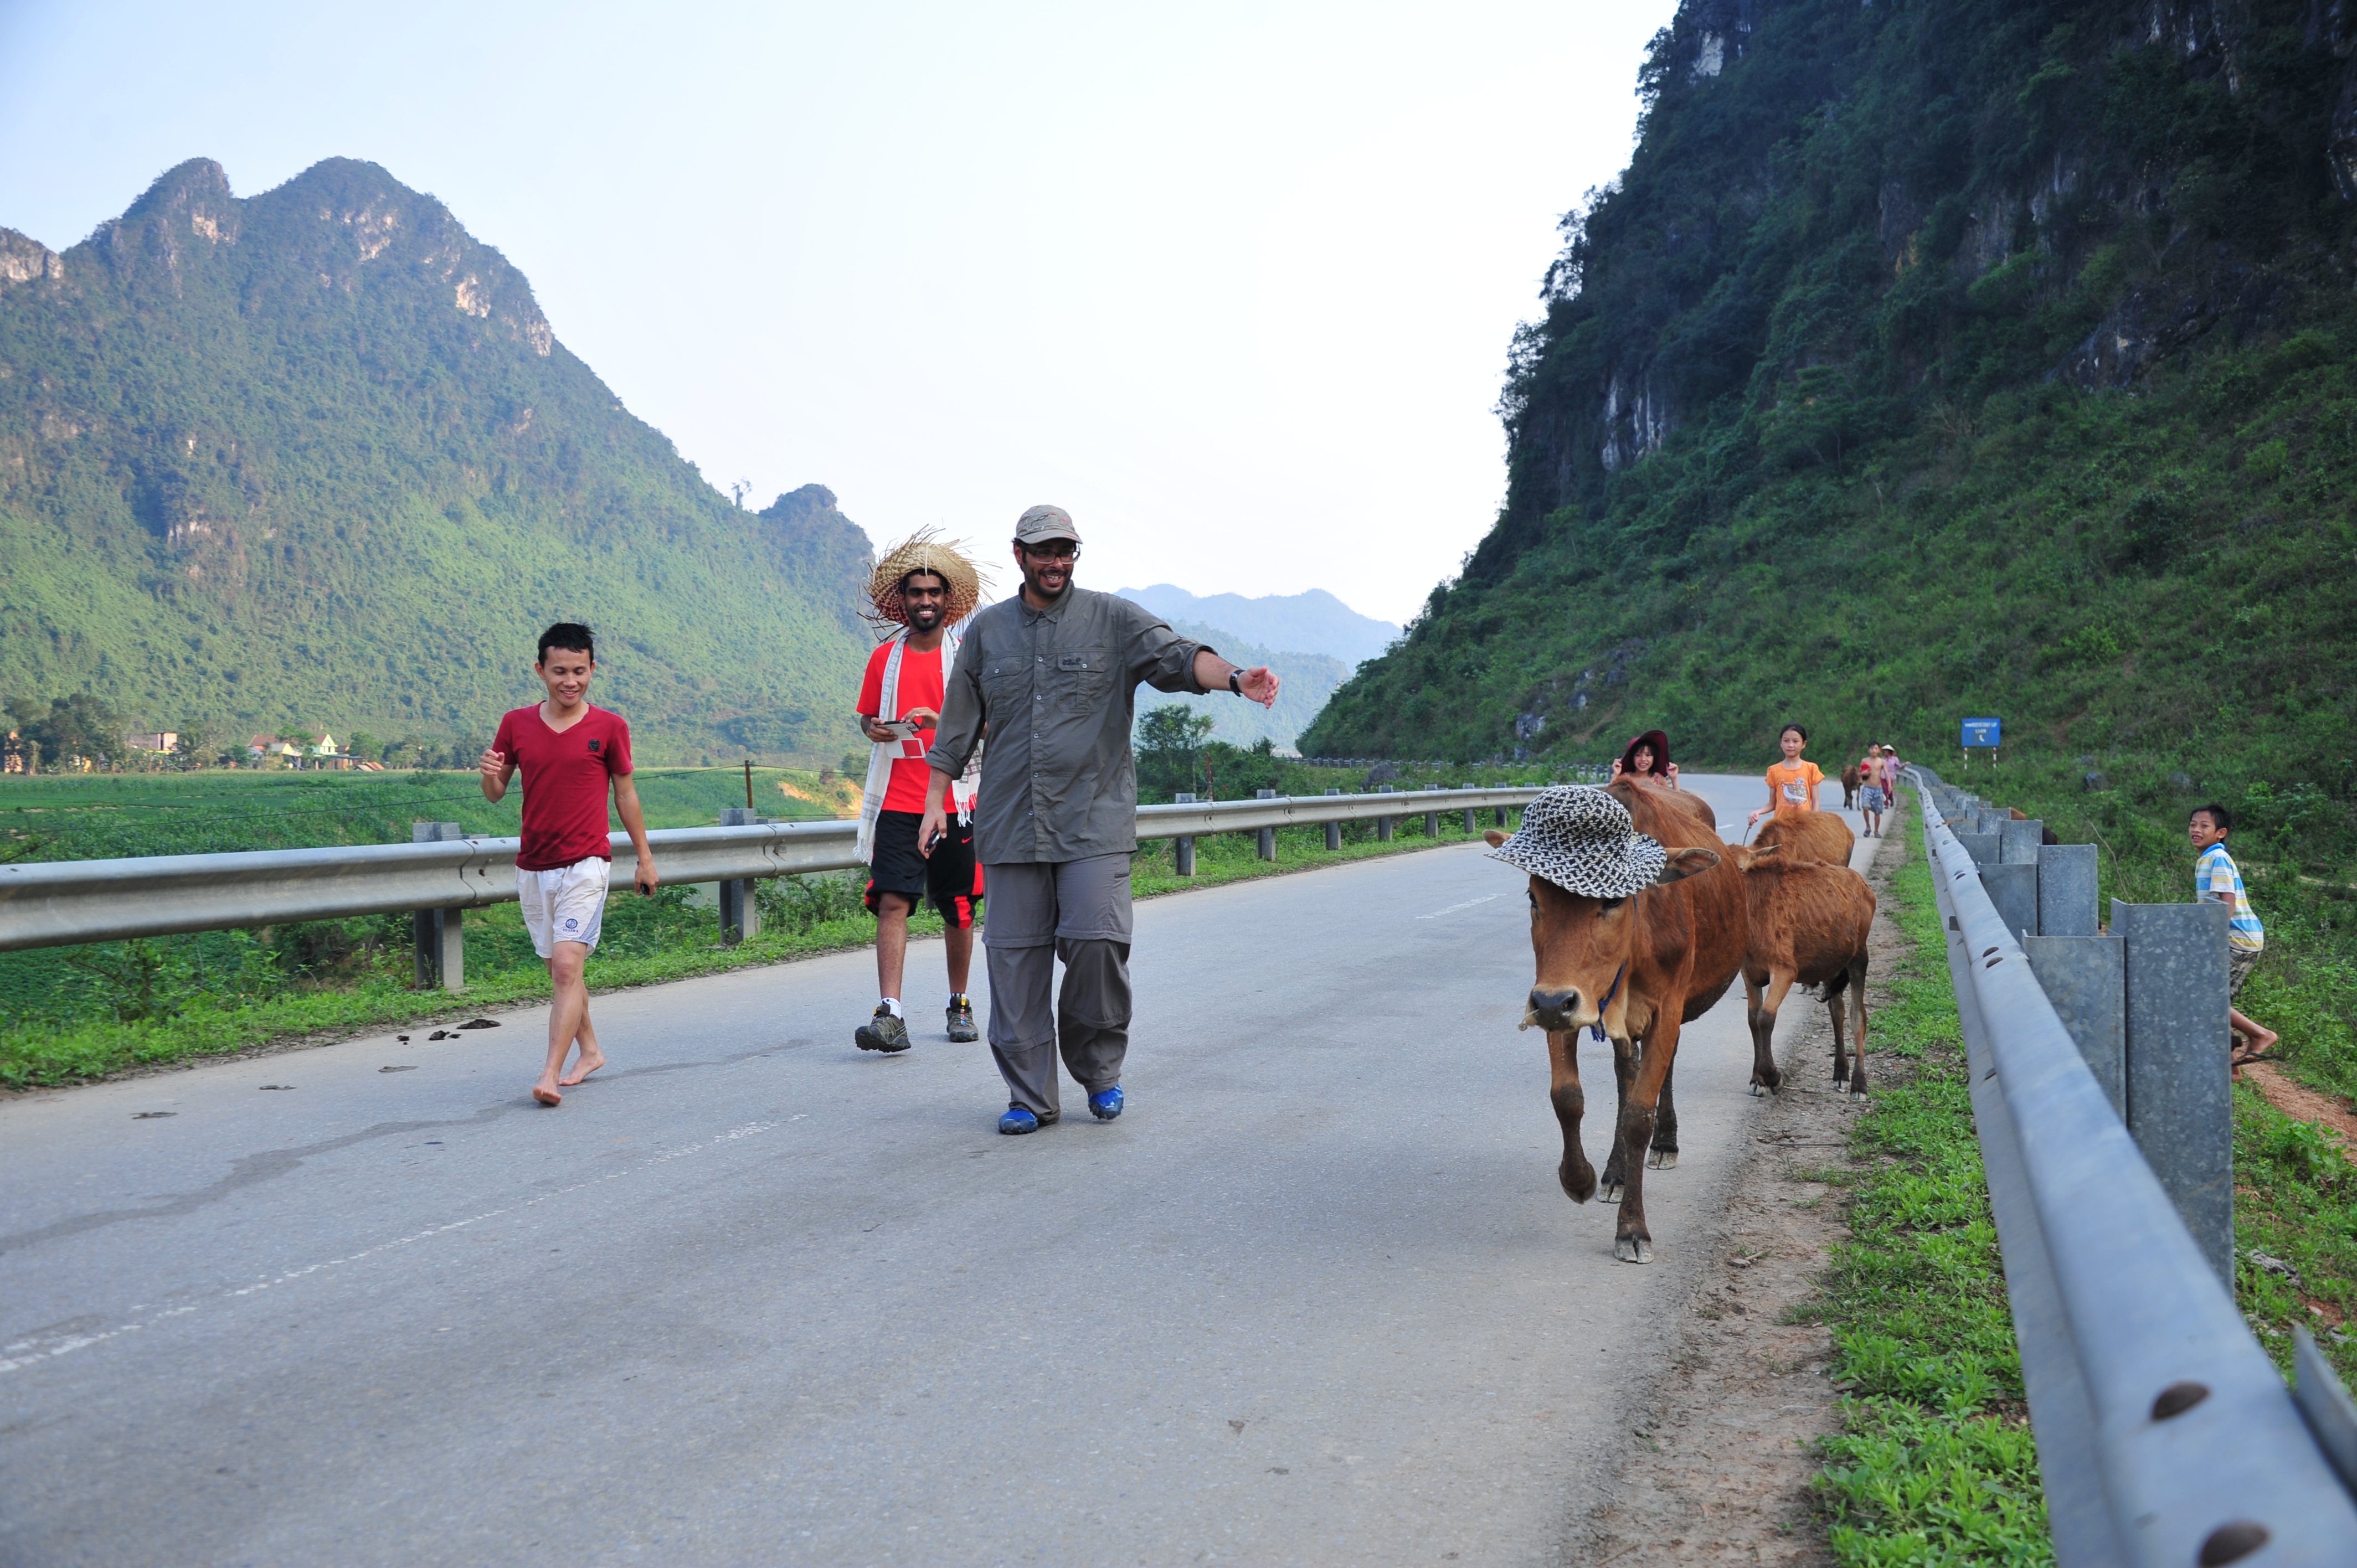 In photos: Arab Sheikh in awe of Vietnam’s Phong Nha on return trip